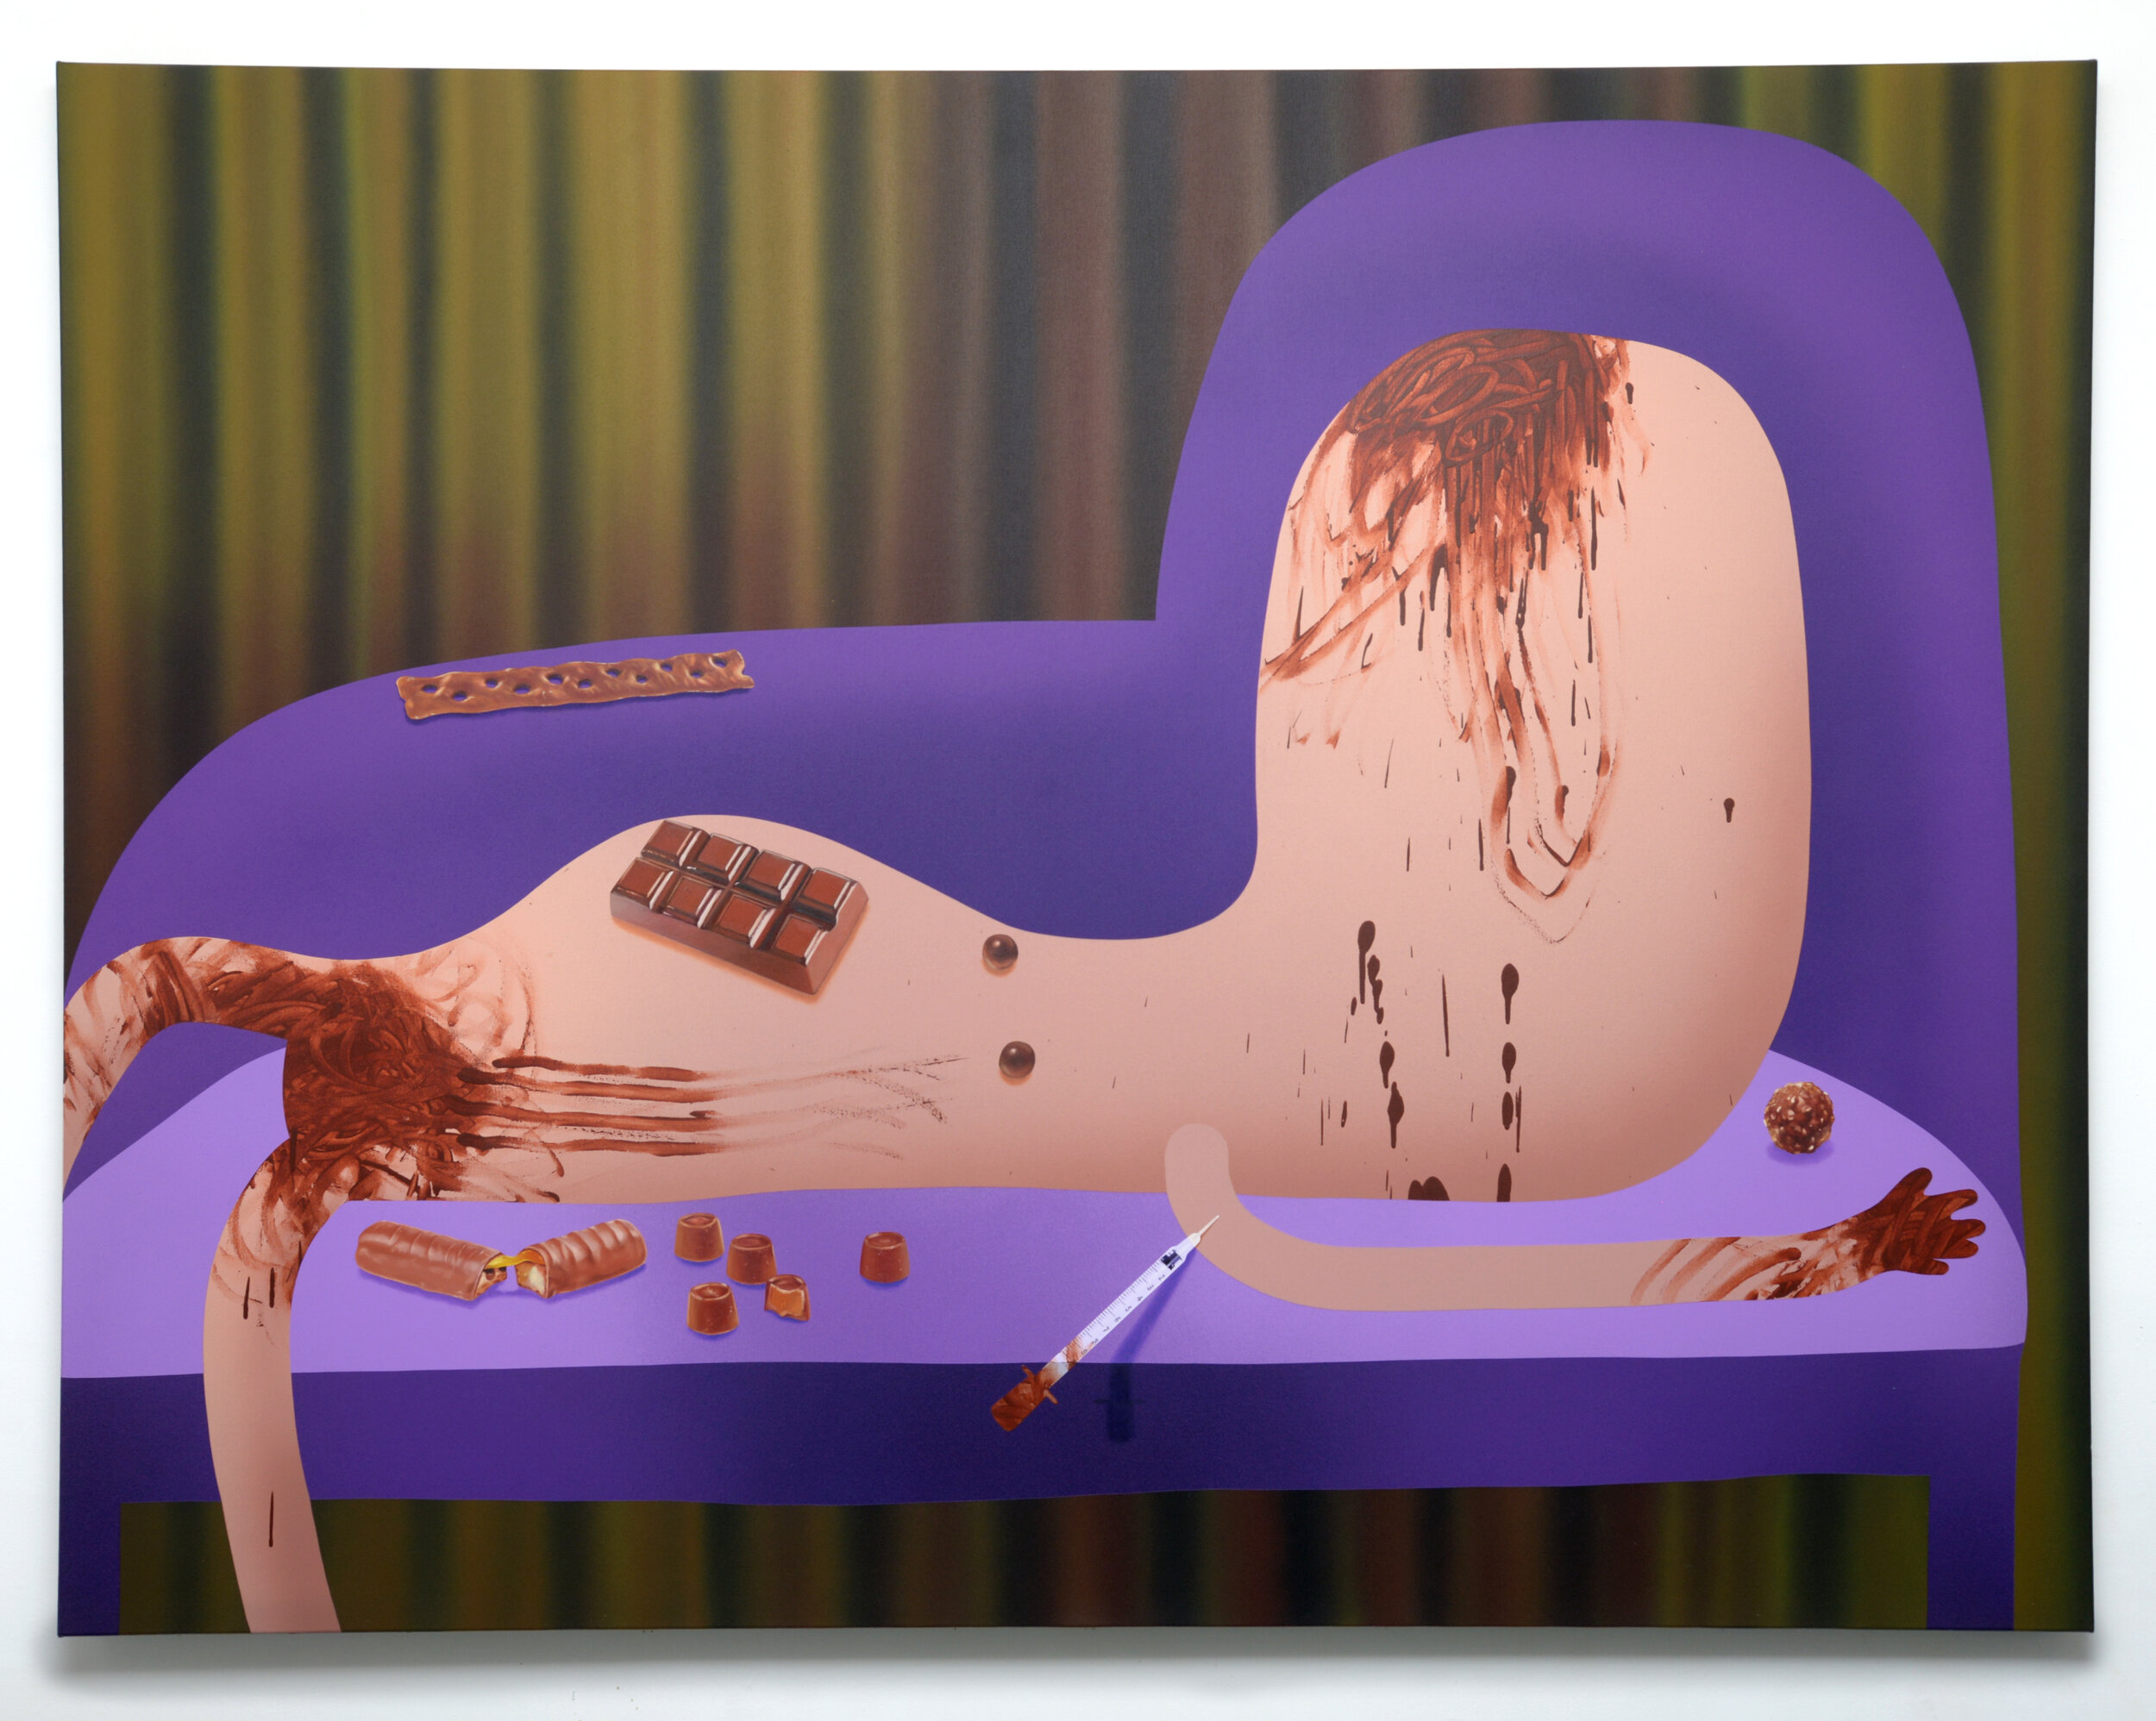 'Death by Chocolate', 2019, oil and acrylic on canvas, 200cm x 155cm